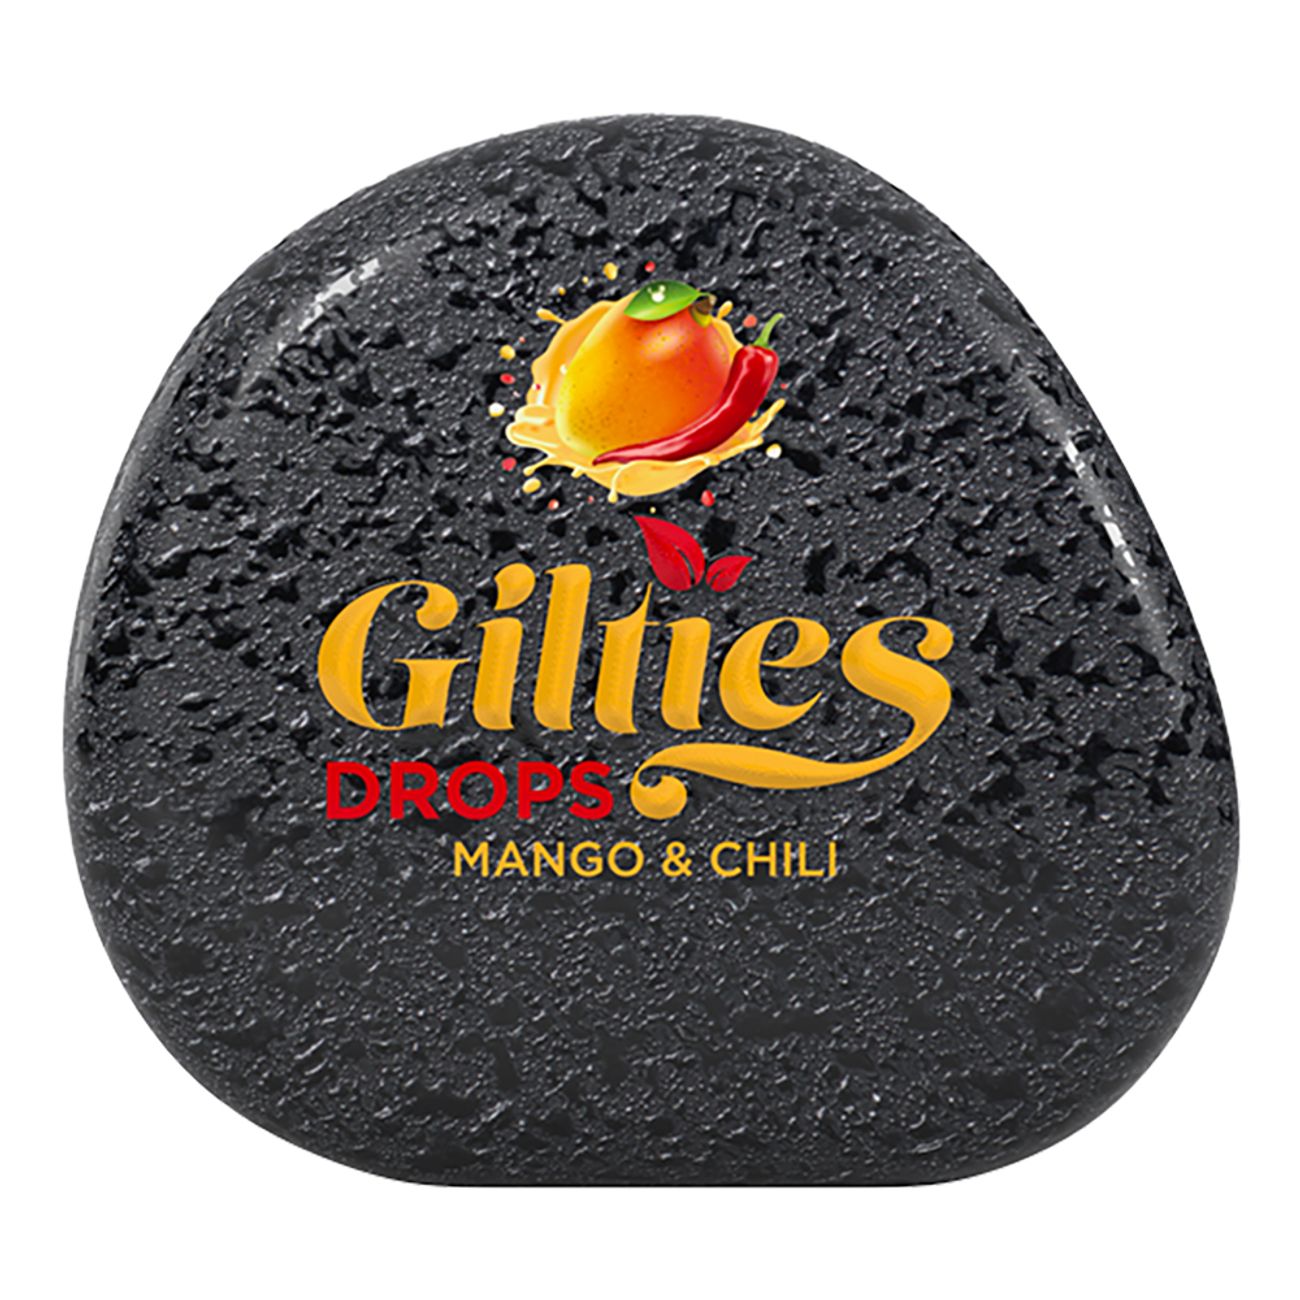 gilties-drops-mango-chili-86566-1